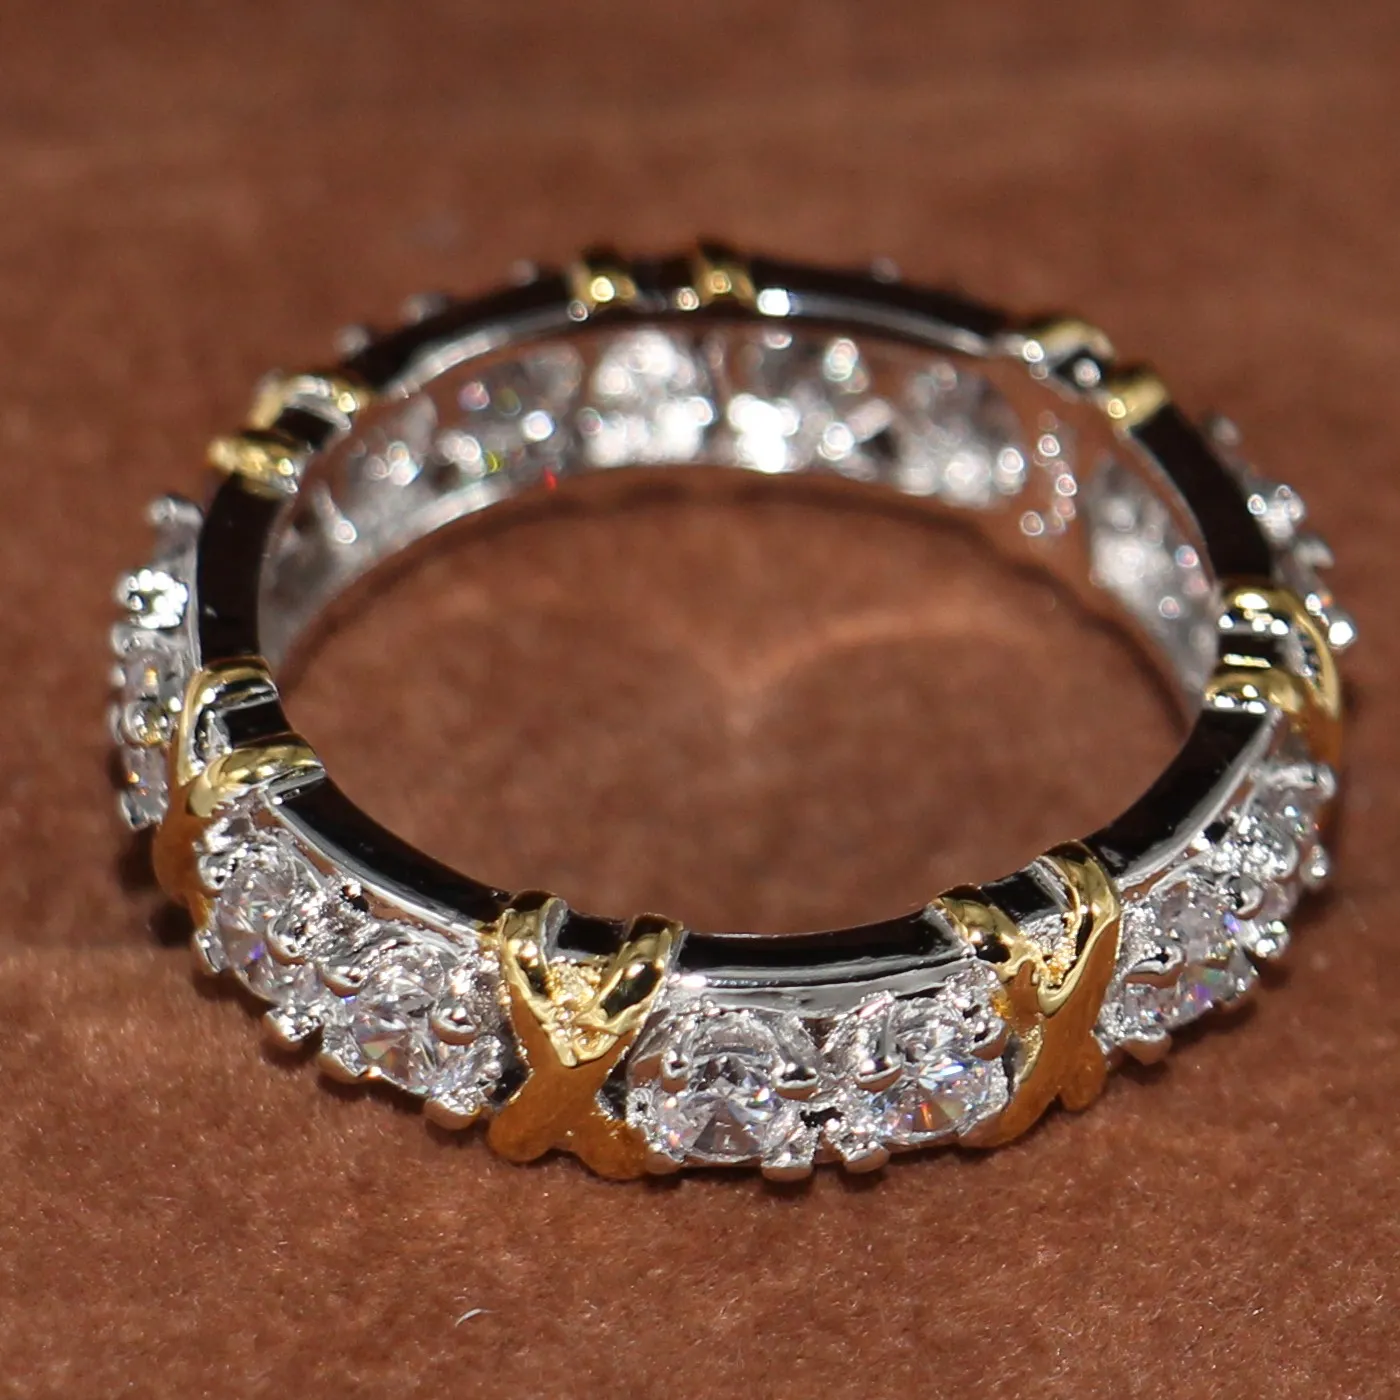 Hele professionele eeuwigheid Diamonique CZ gesimuleerde diamant 10KT WhiteYellow Gold Filled Wedding Band Cross Ring maat 5-11182C